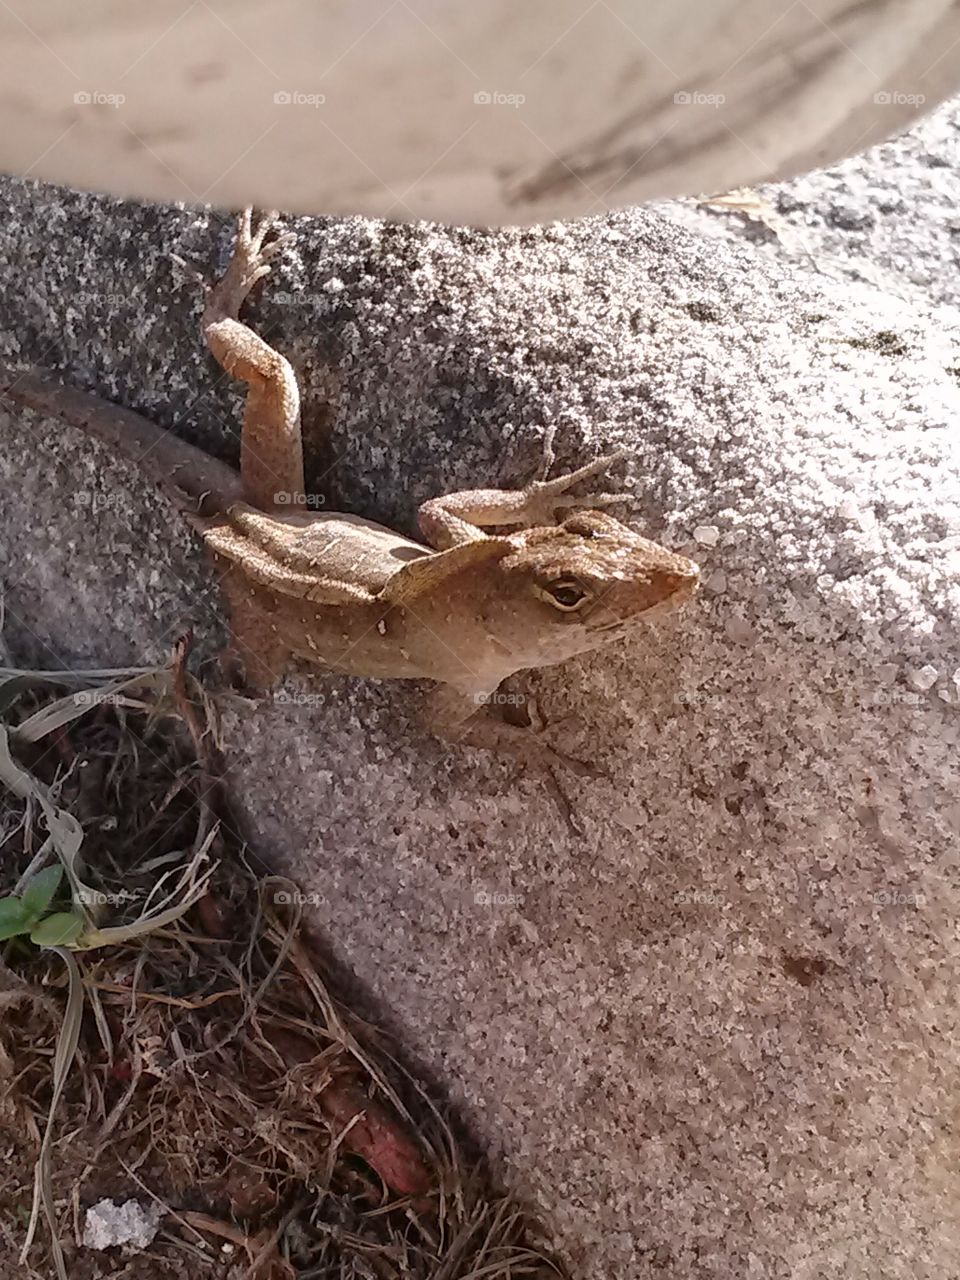 leaping lizard . lizard 